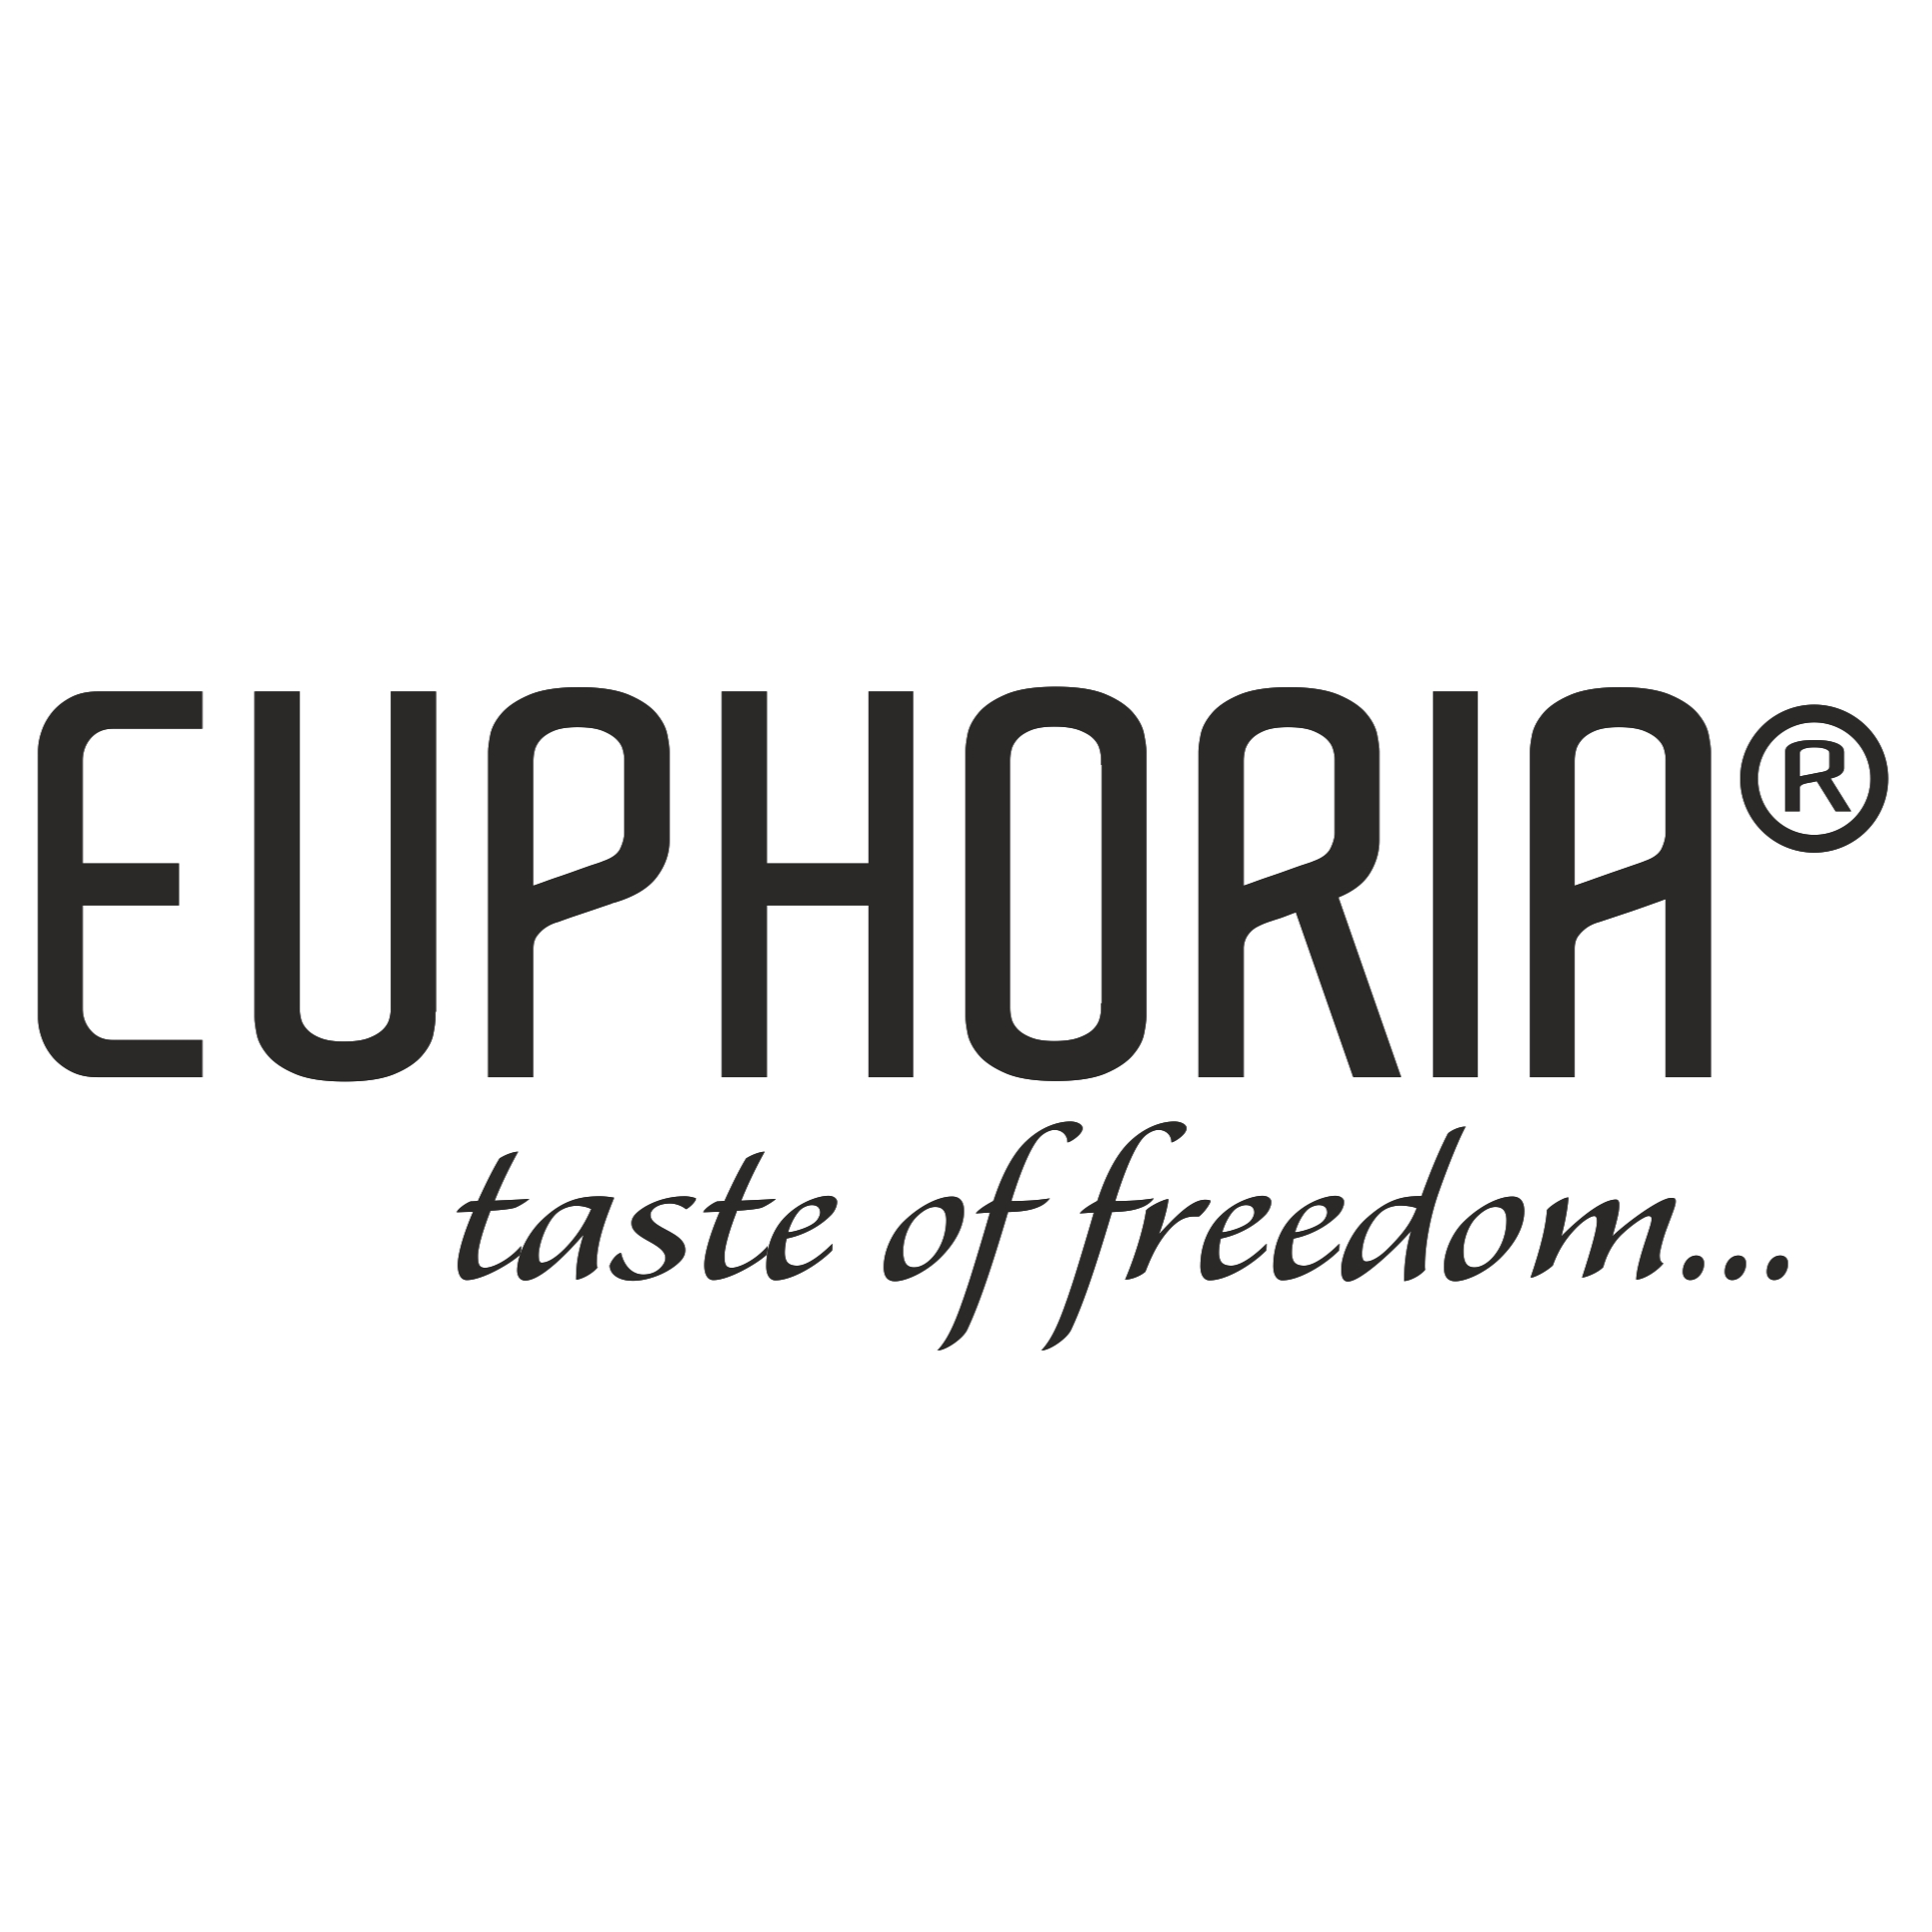 Euphoria-logo1